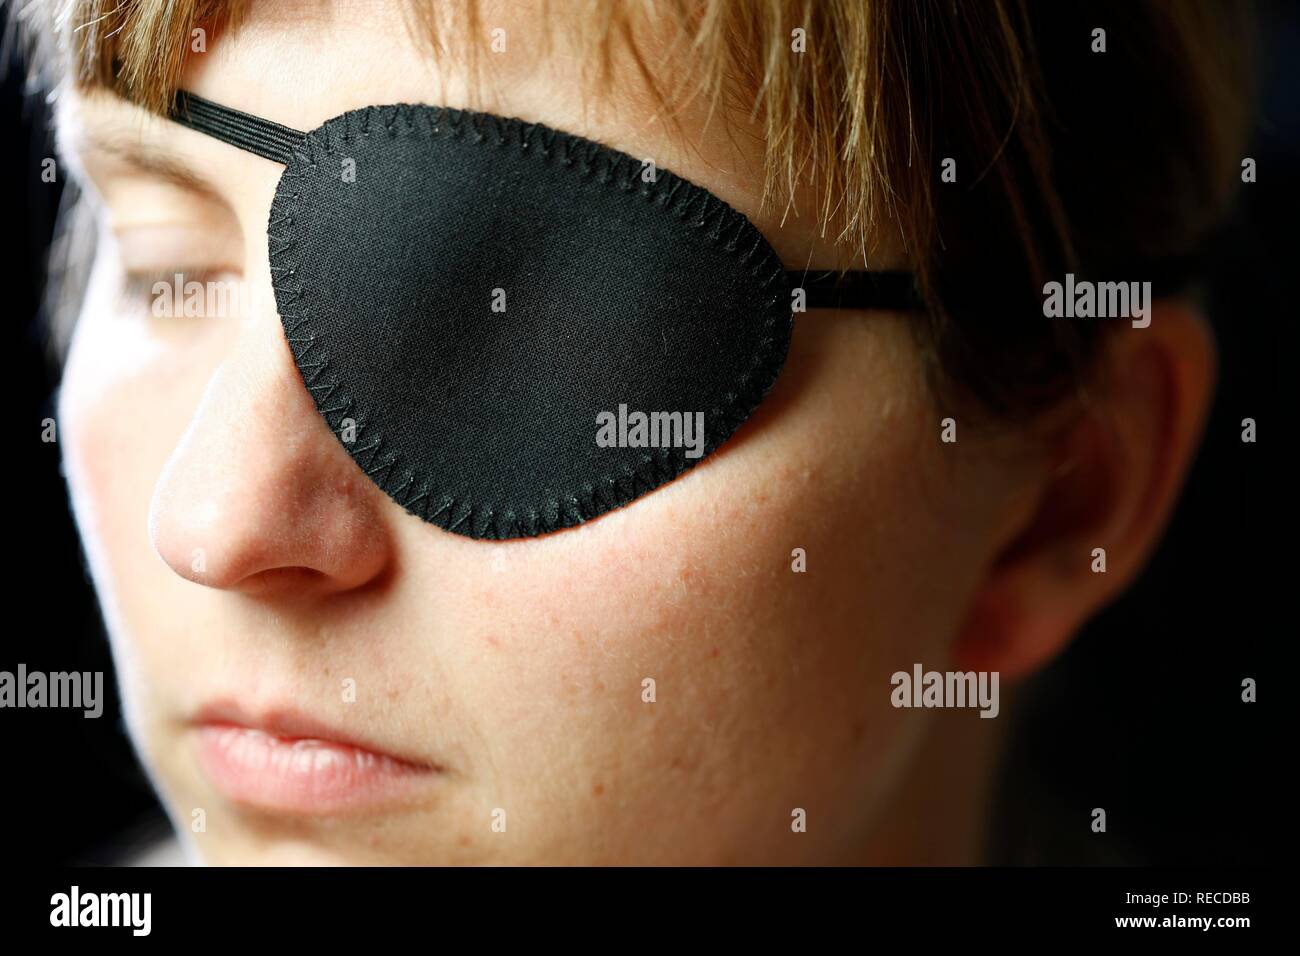 Young woman wearing a black eye patch Stock Photo